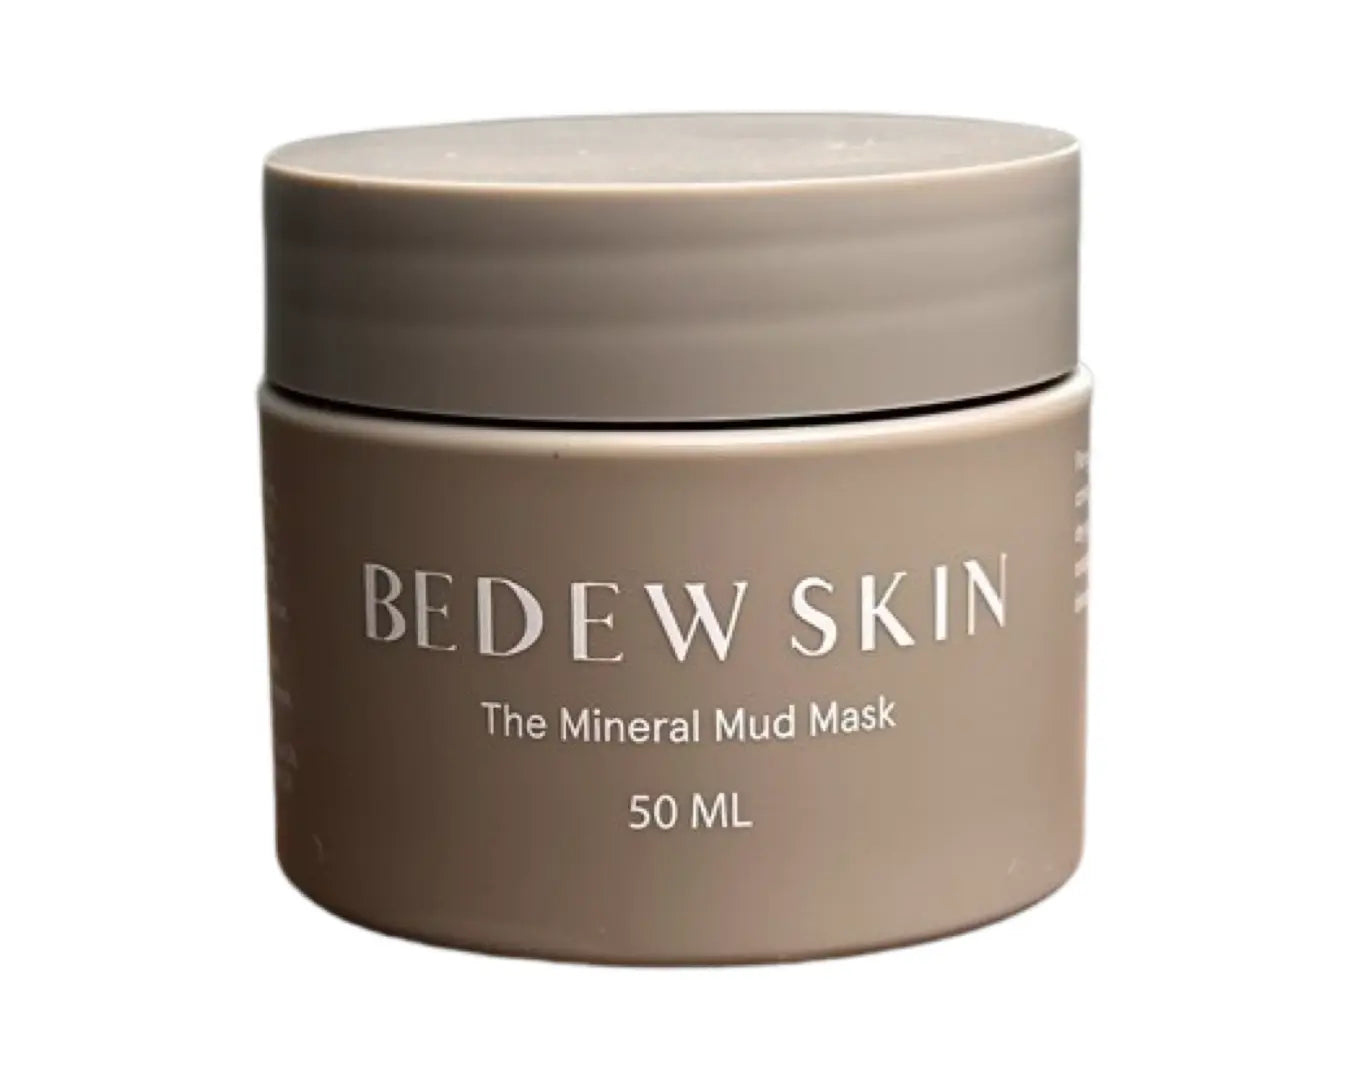 The Mineral Mud Mask - Bedew Skin Bedew Skin